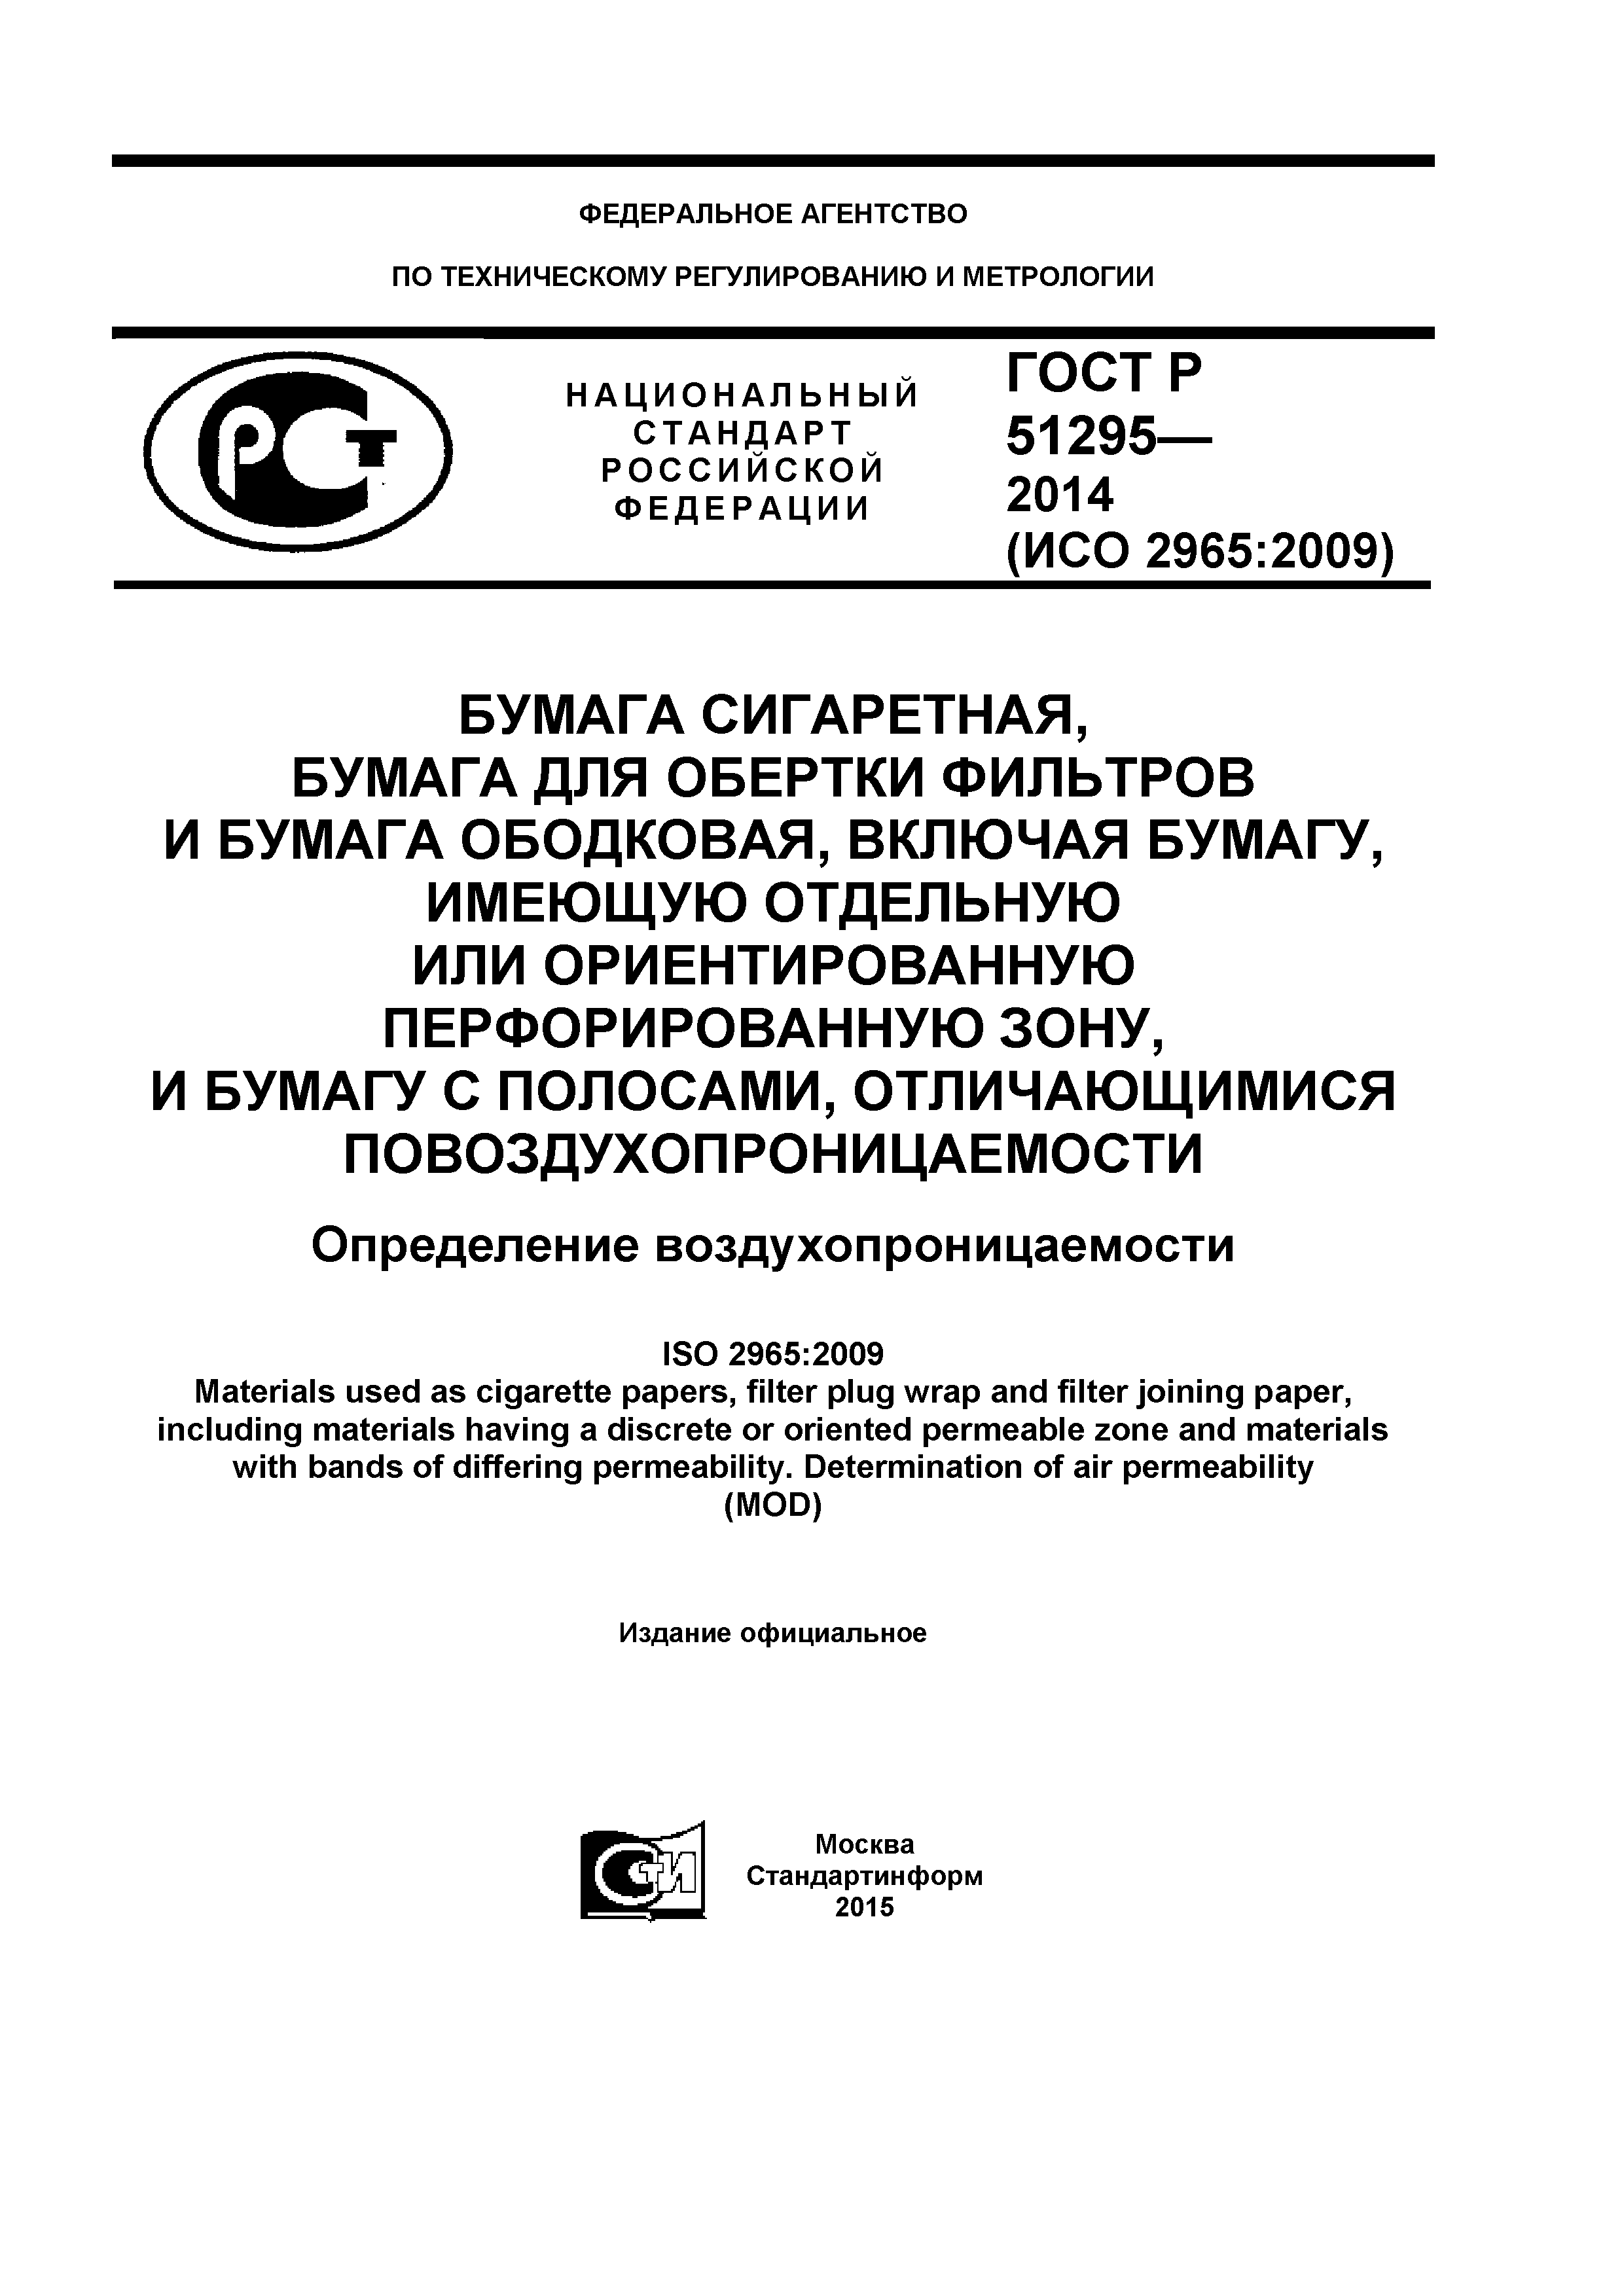 ГОСТ Р 51295-2014